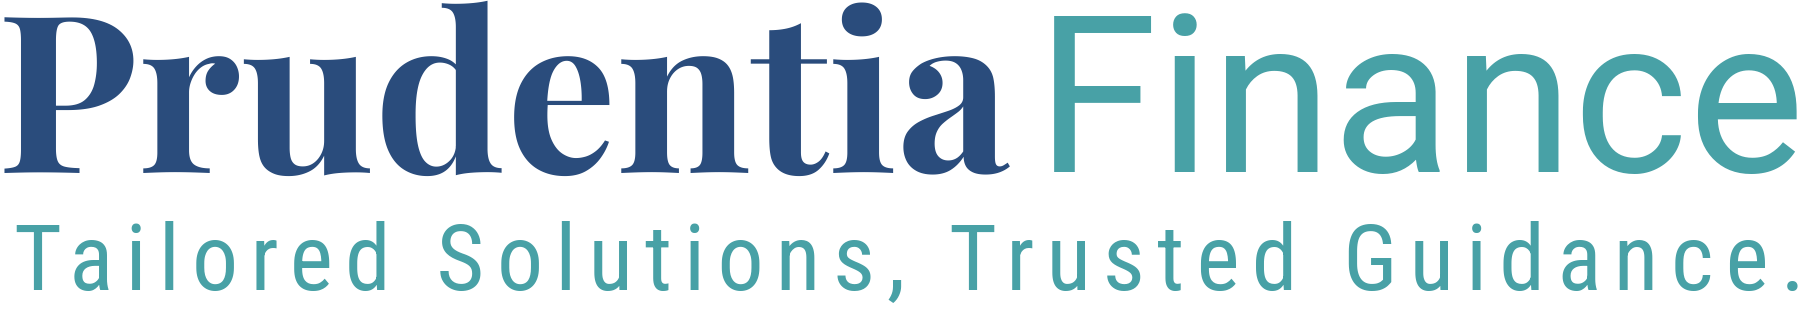 Prudentia Finance Text Logo